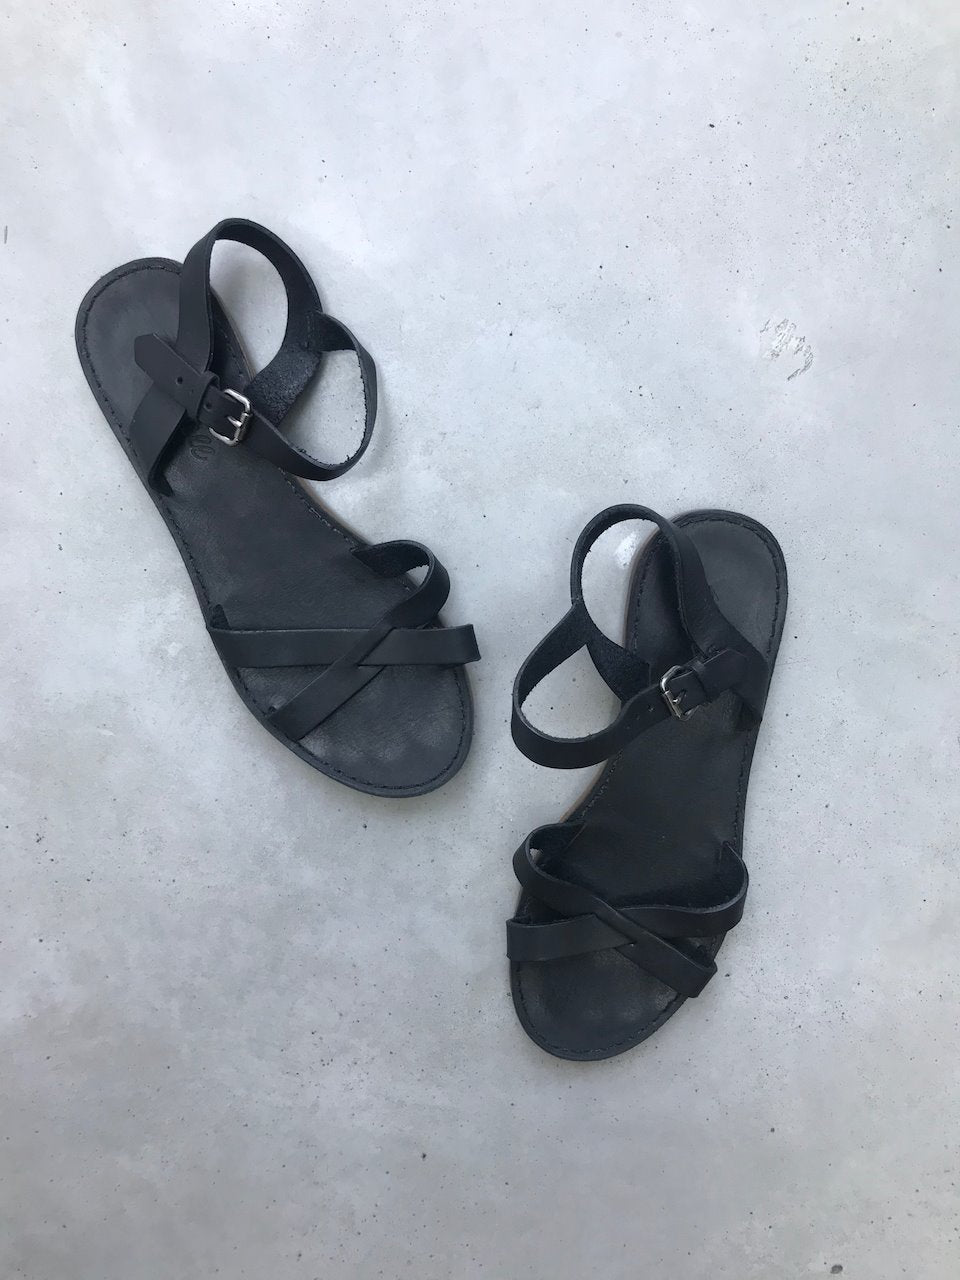 Madewell black leather flat sandals